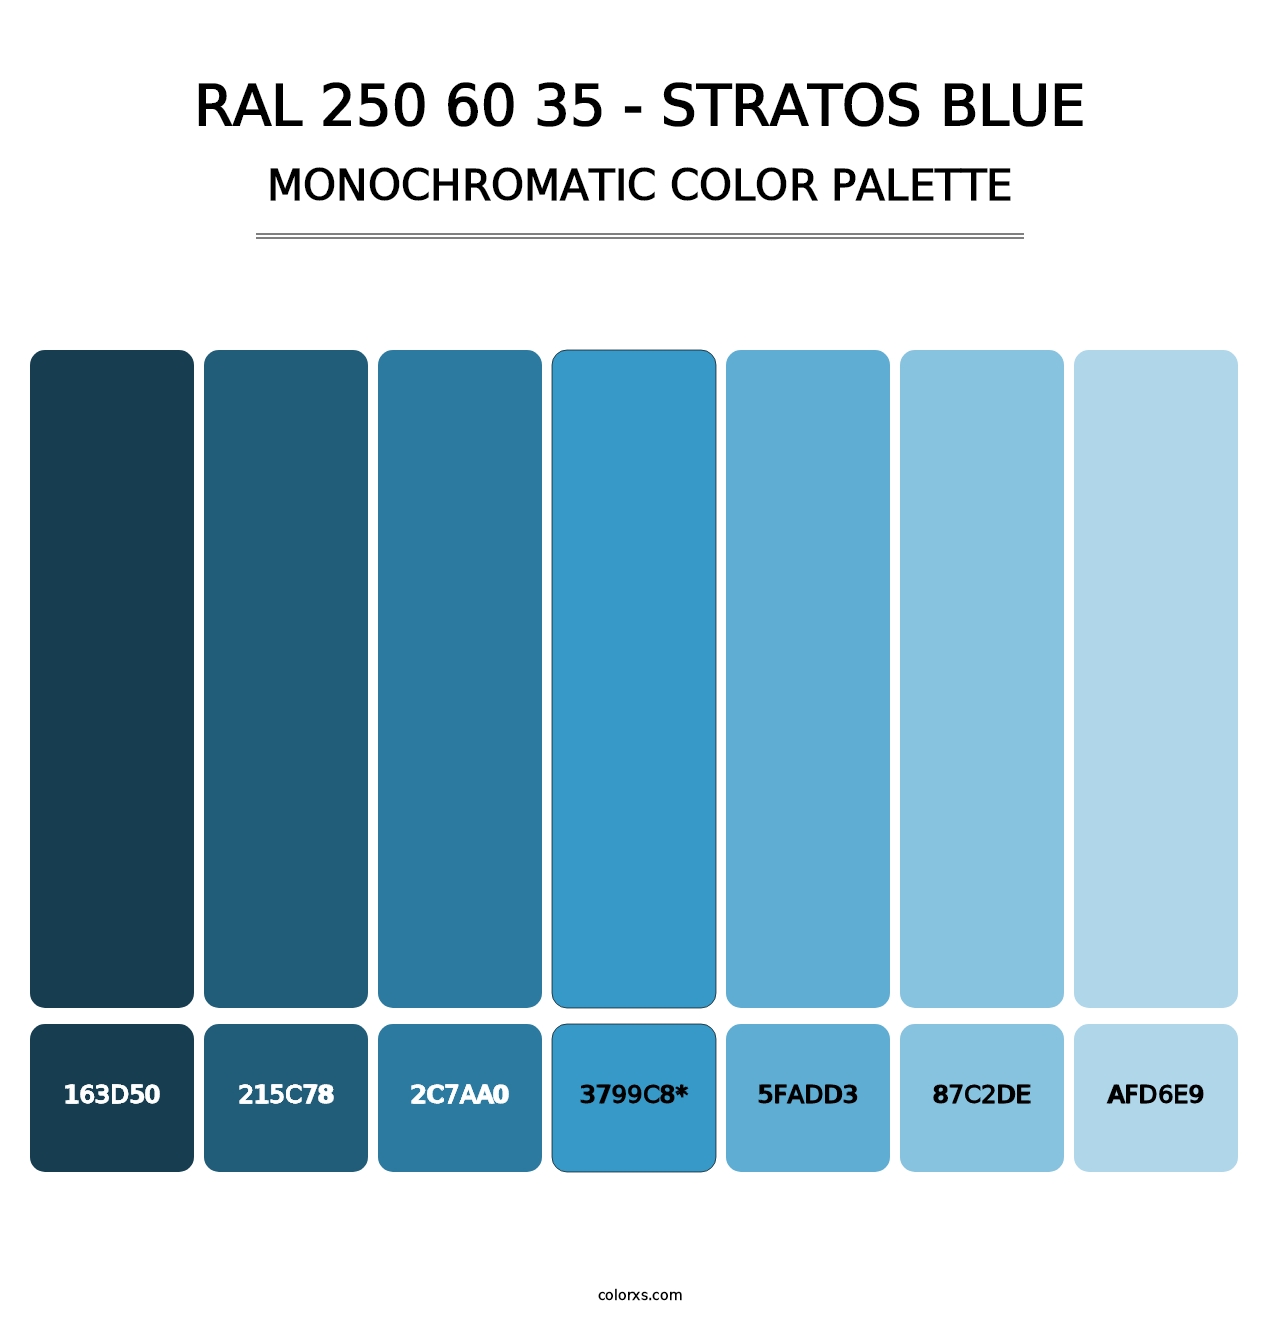 RAL 250 60 35 - Stratos Blue - Monochromatic Color Palette